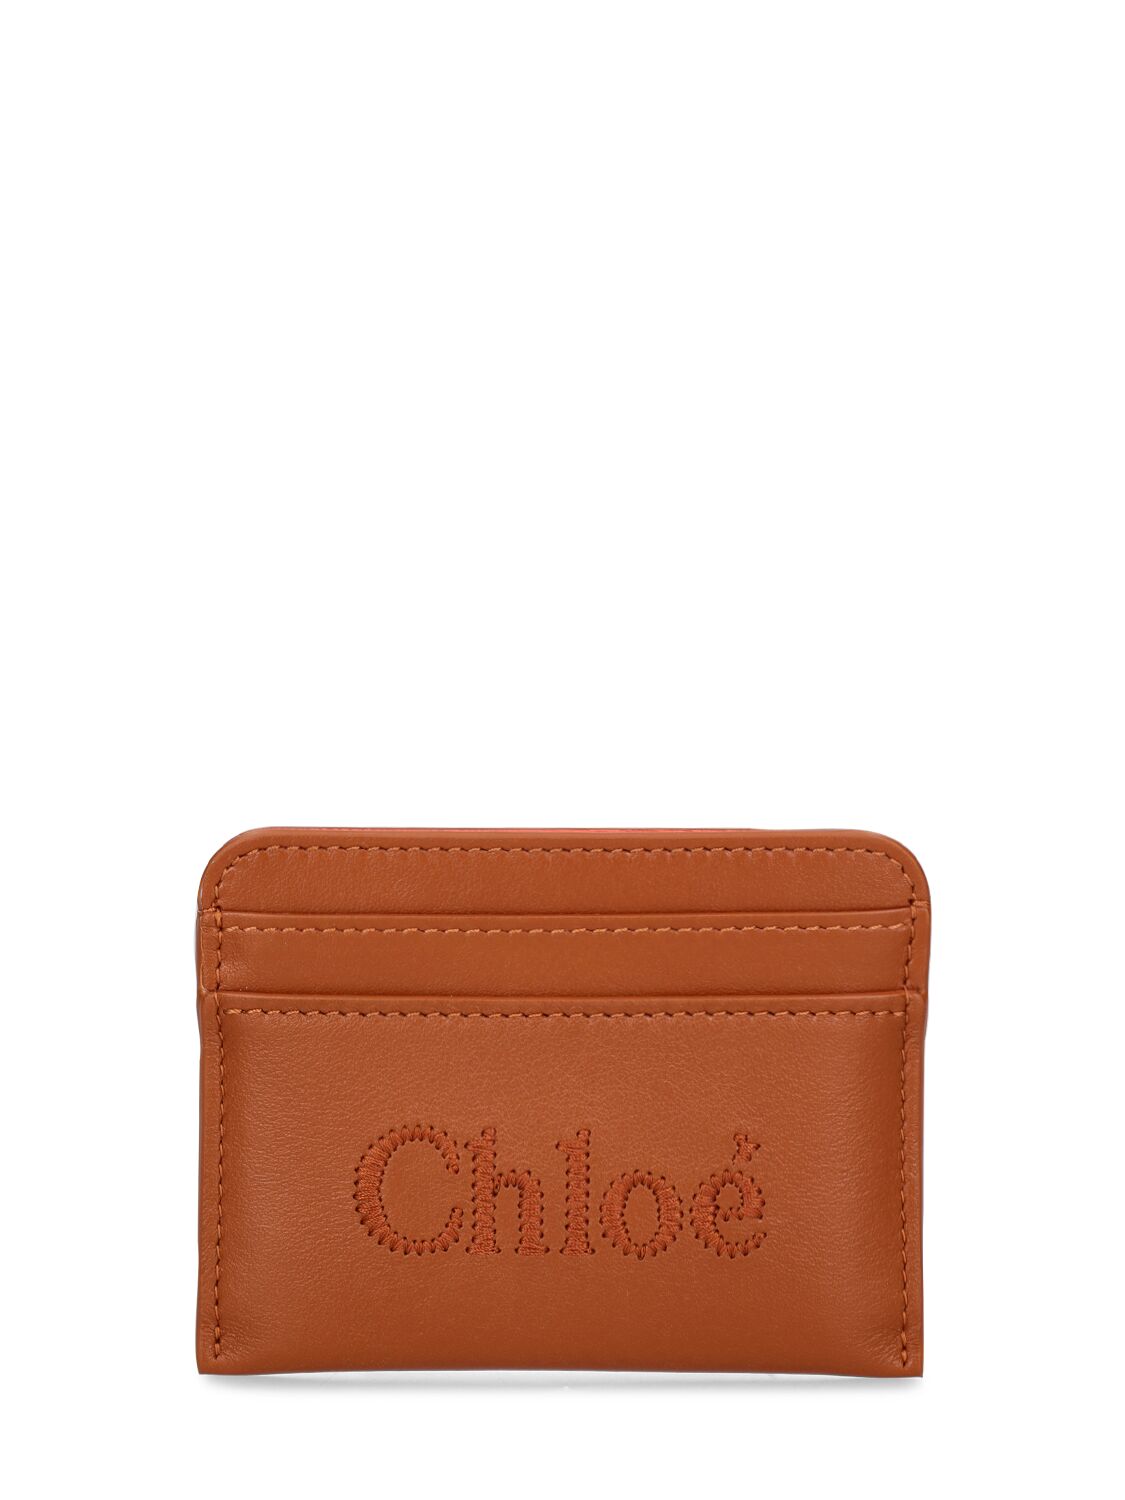 Chloé Chloe Sense Leather Card Holder In Caramel